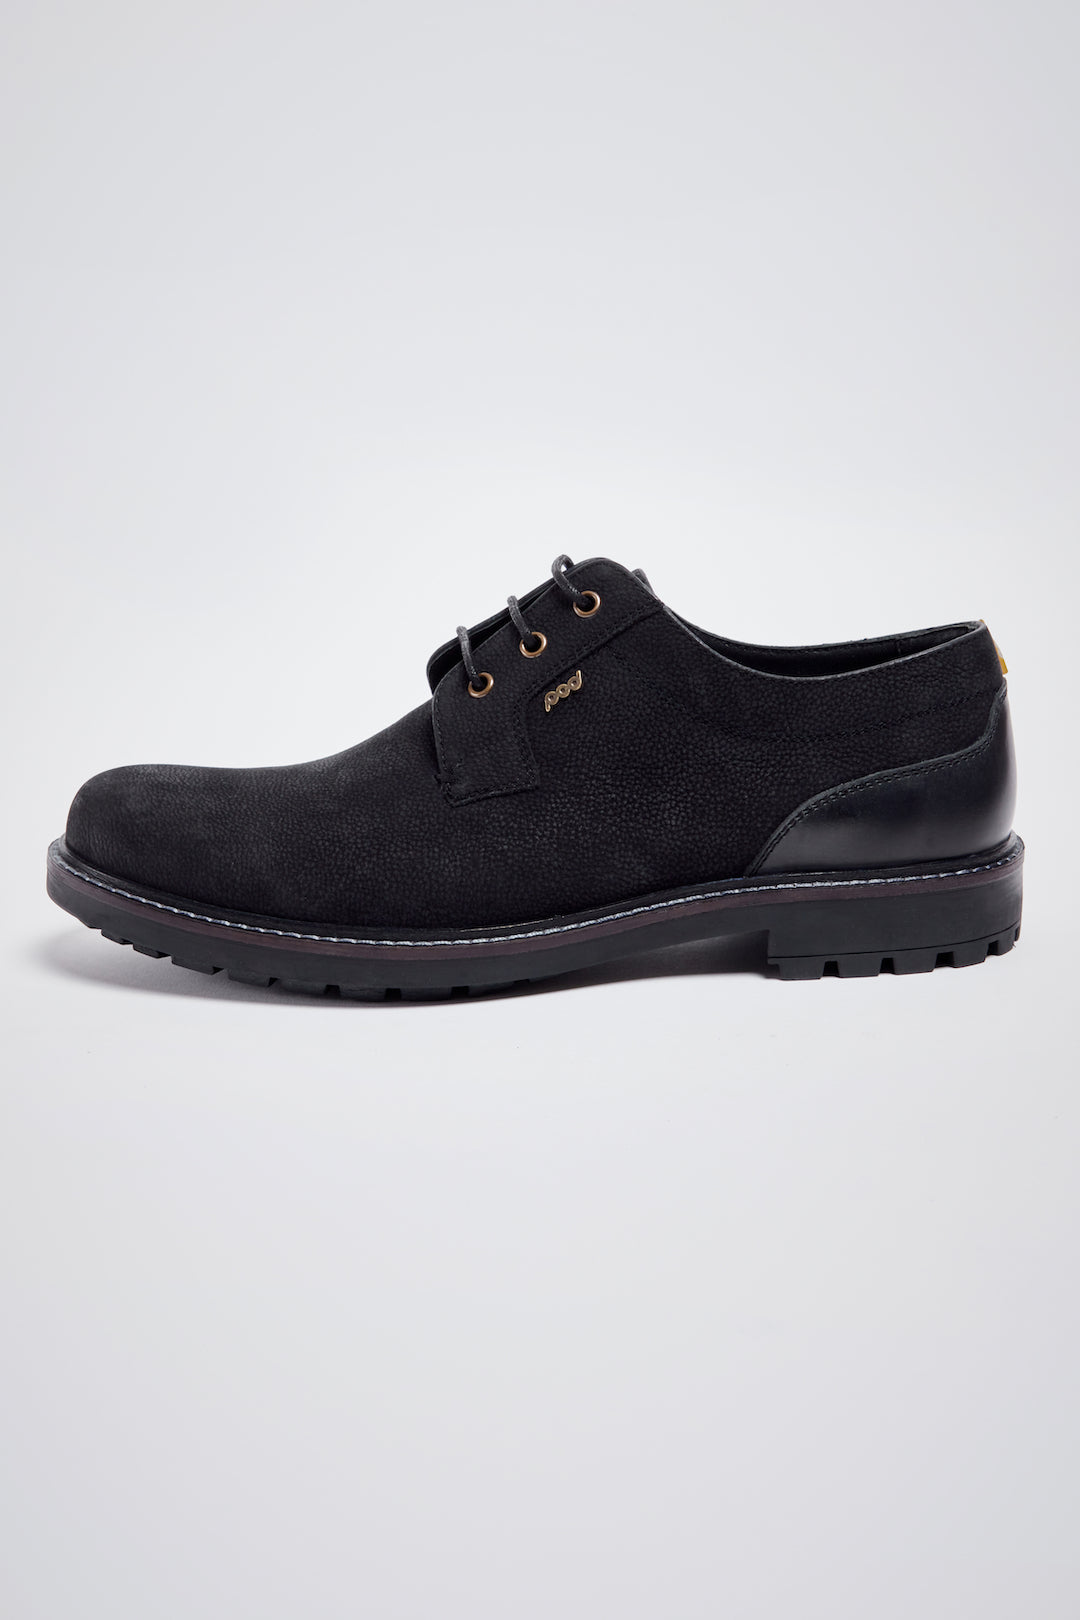 Pods Samuel Mens Black Leather Lace Up Shoes